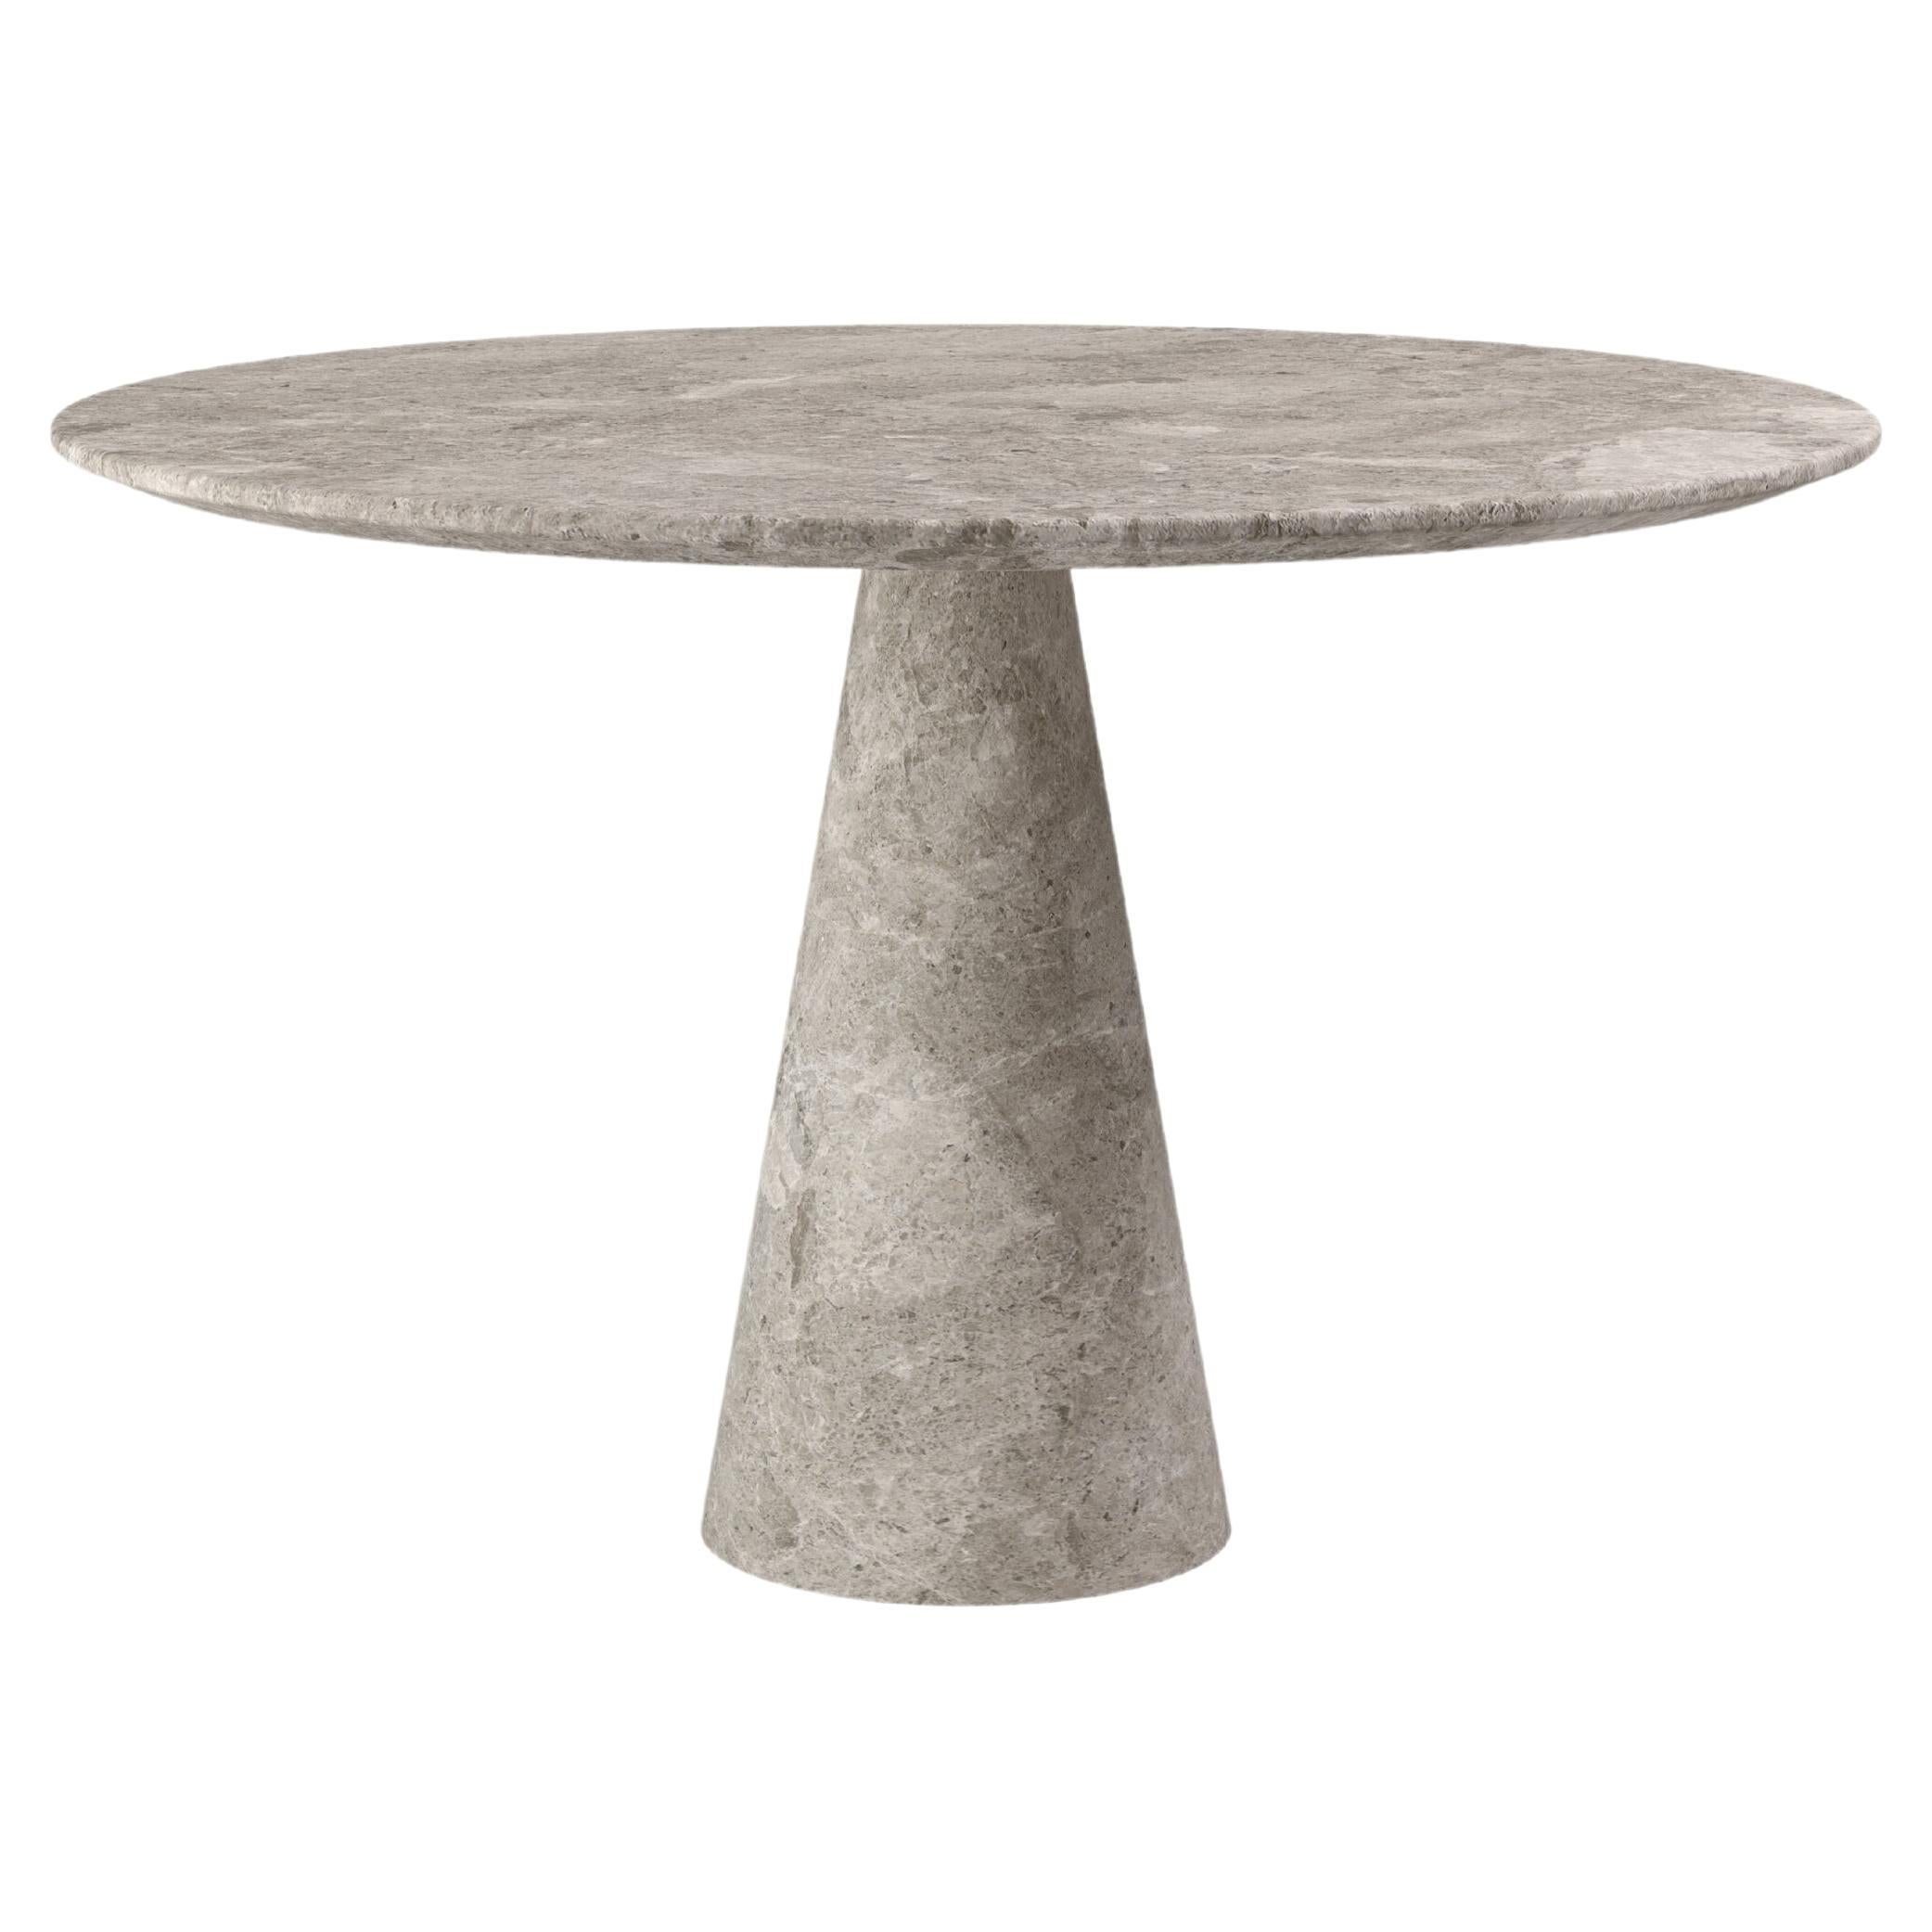 FORM(LA) Cono Round Dining Table 42”L x 42”W x 30”H Tundra Gray Marble For Sale